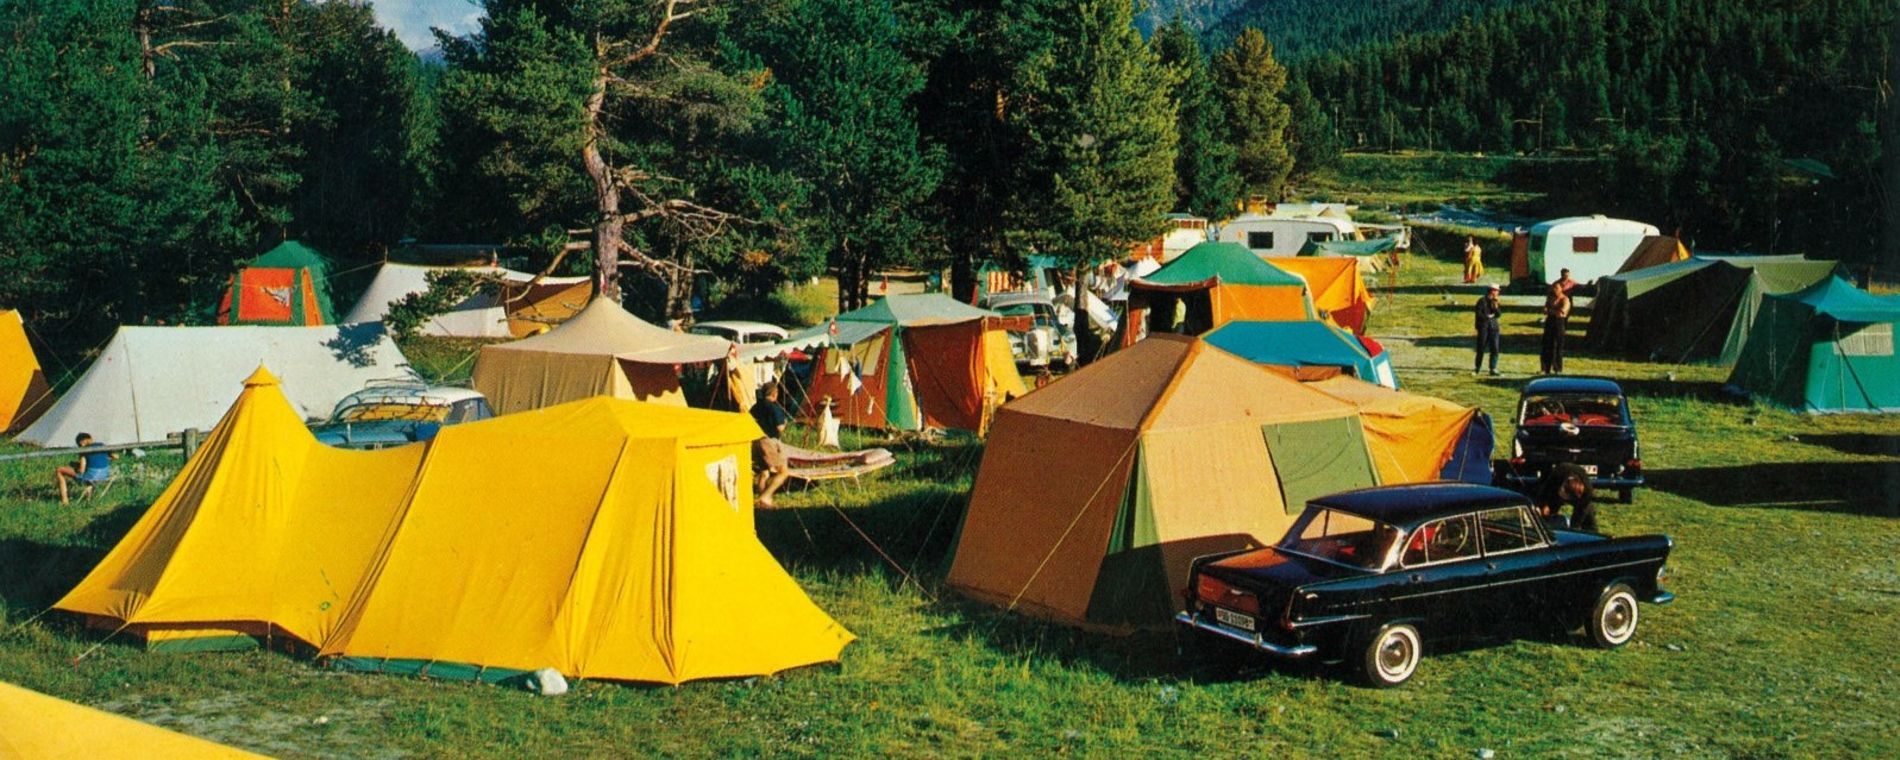 75° anniversario del TCS Camping